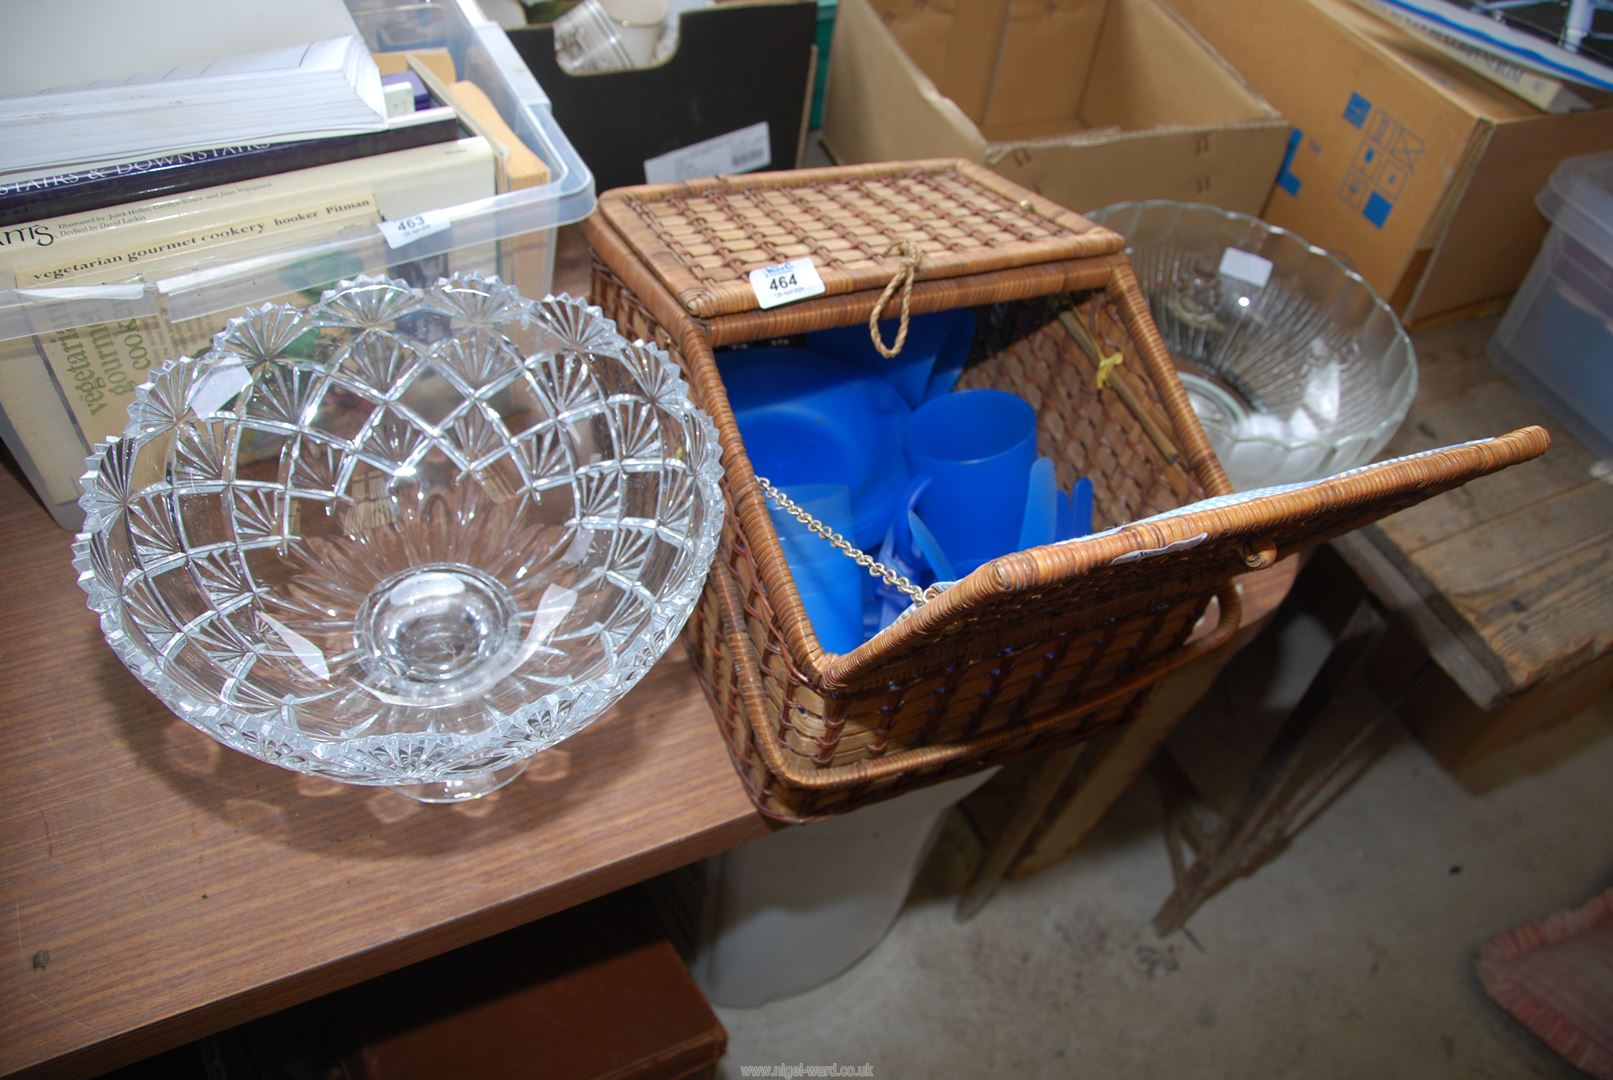 A picnic hamper and contents, stemmed glass fruit bowls etc.